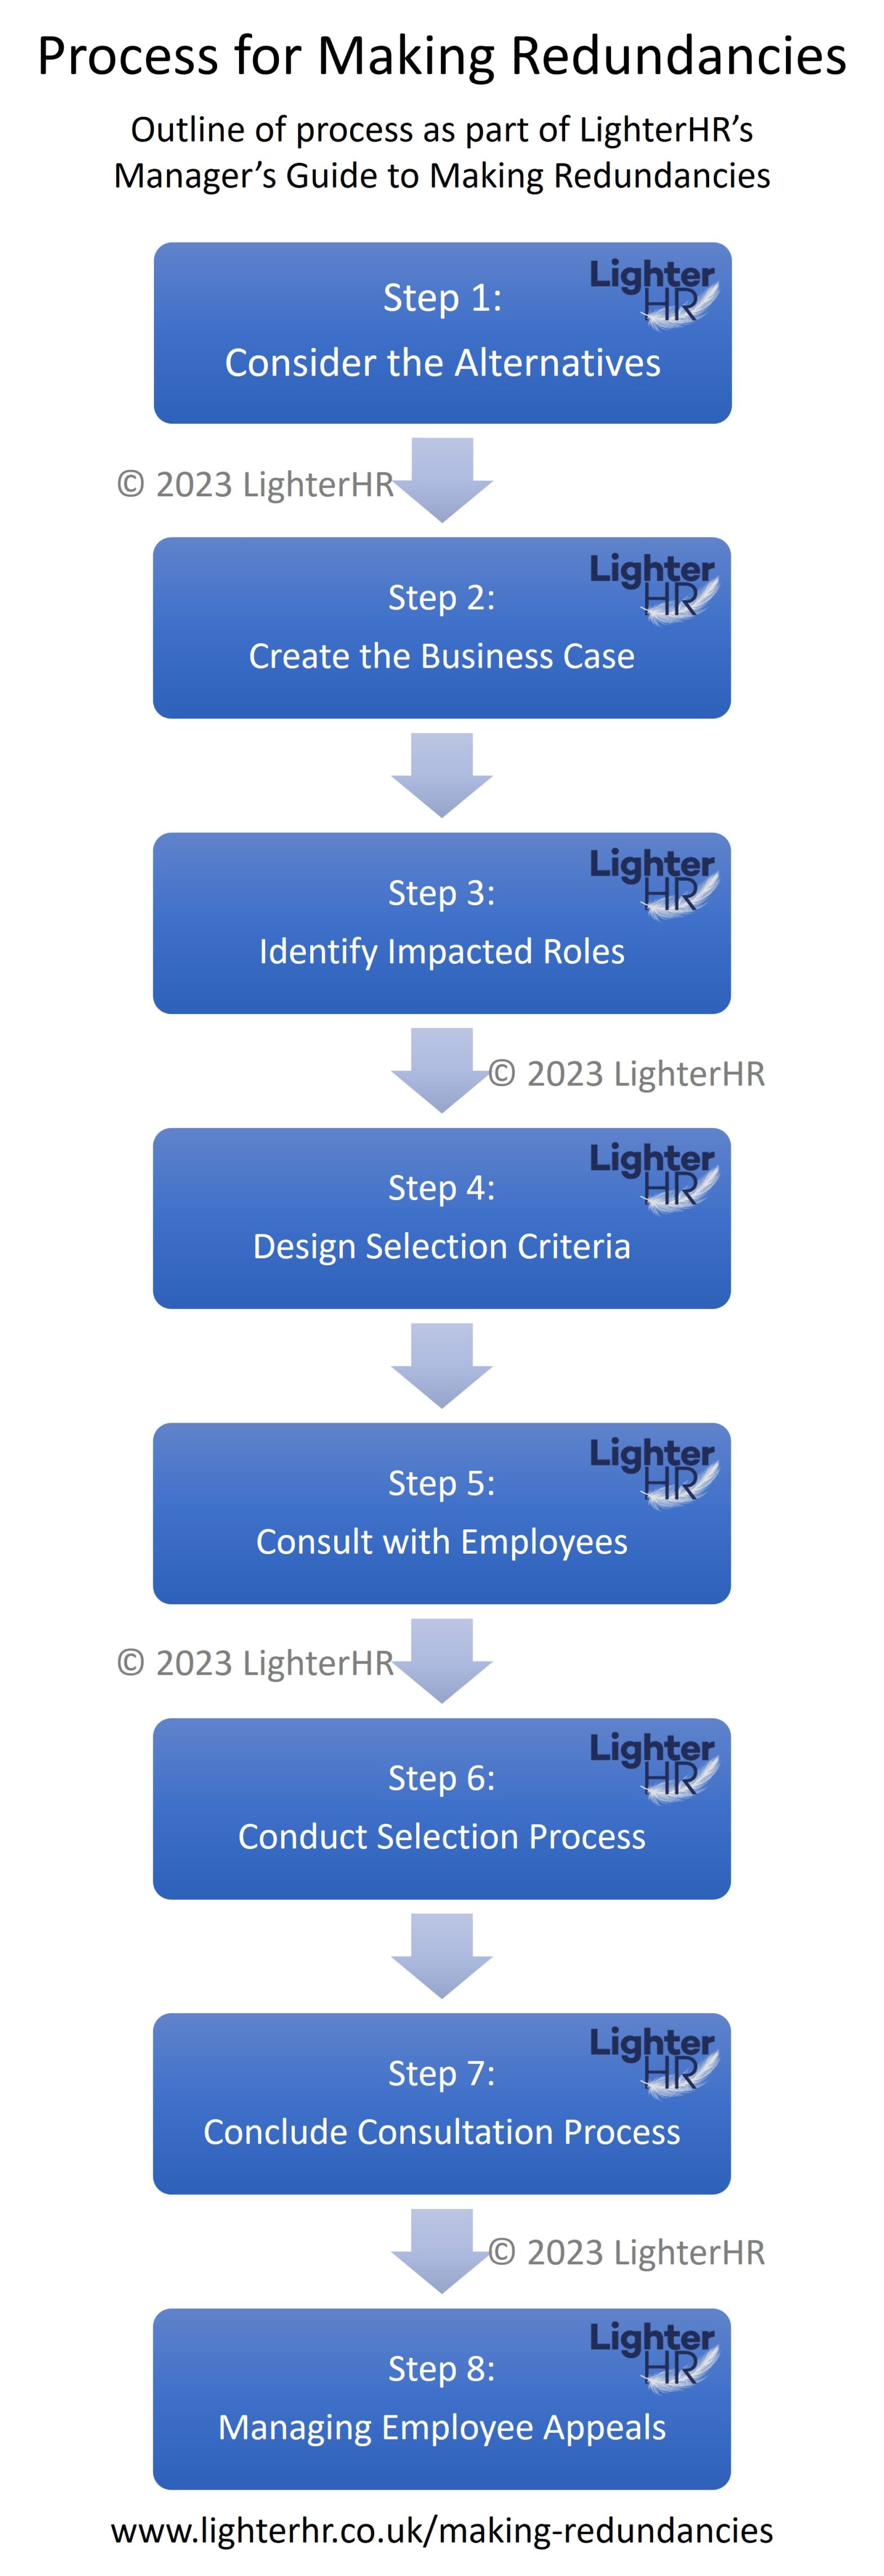 Process for Making Redundancies (mobile) - LighterHR